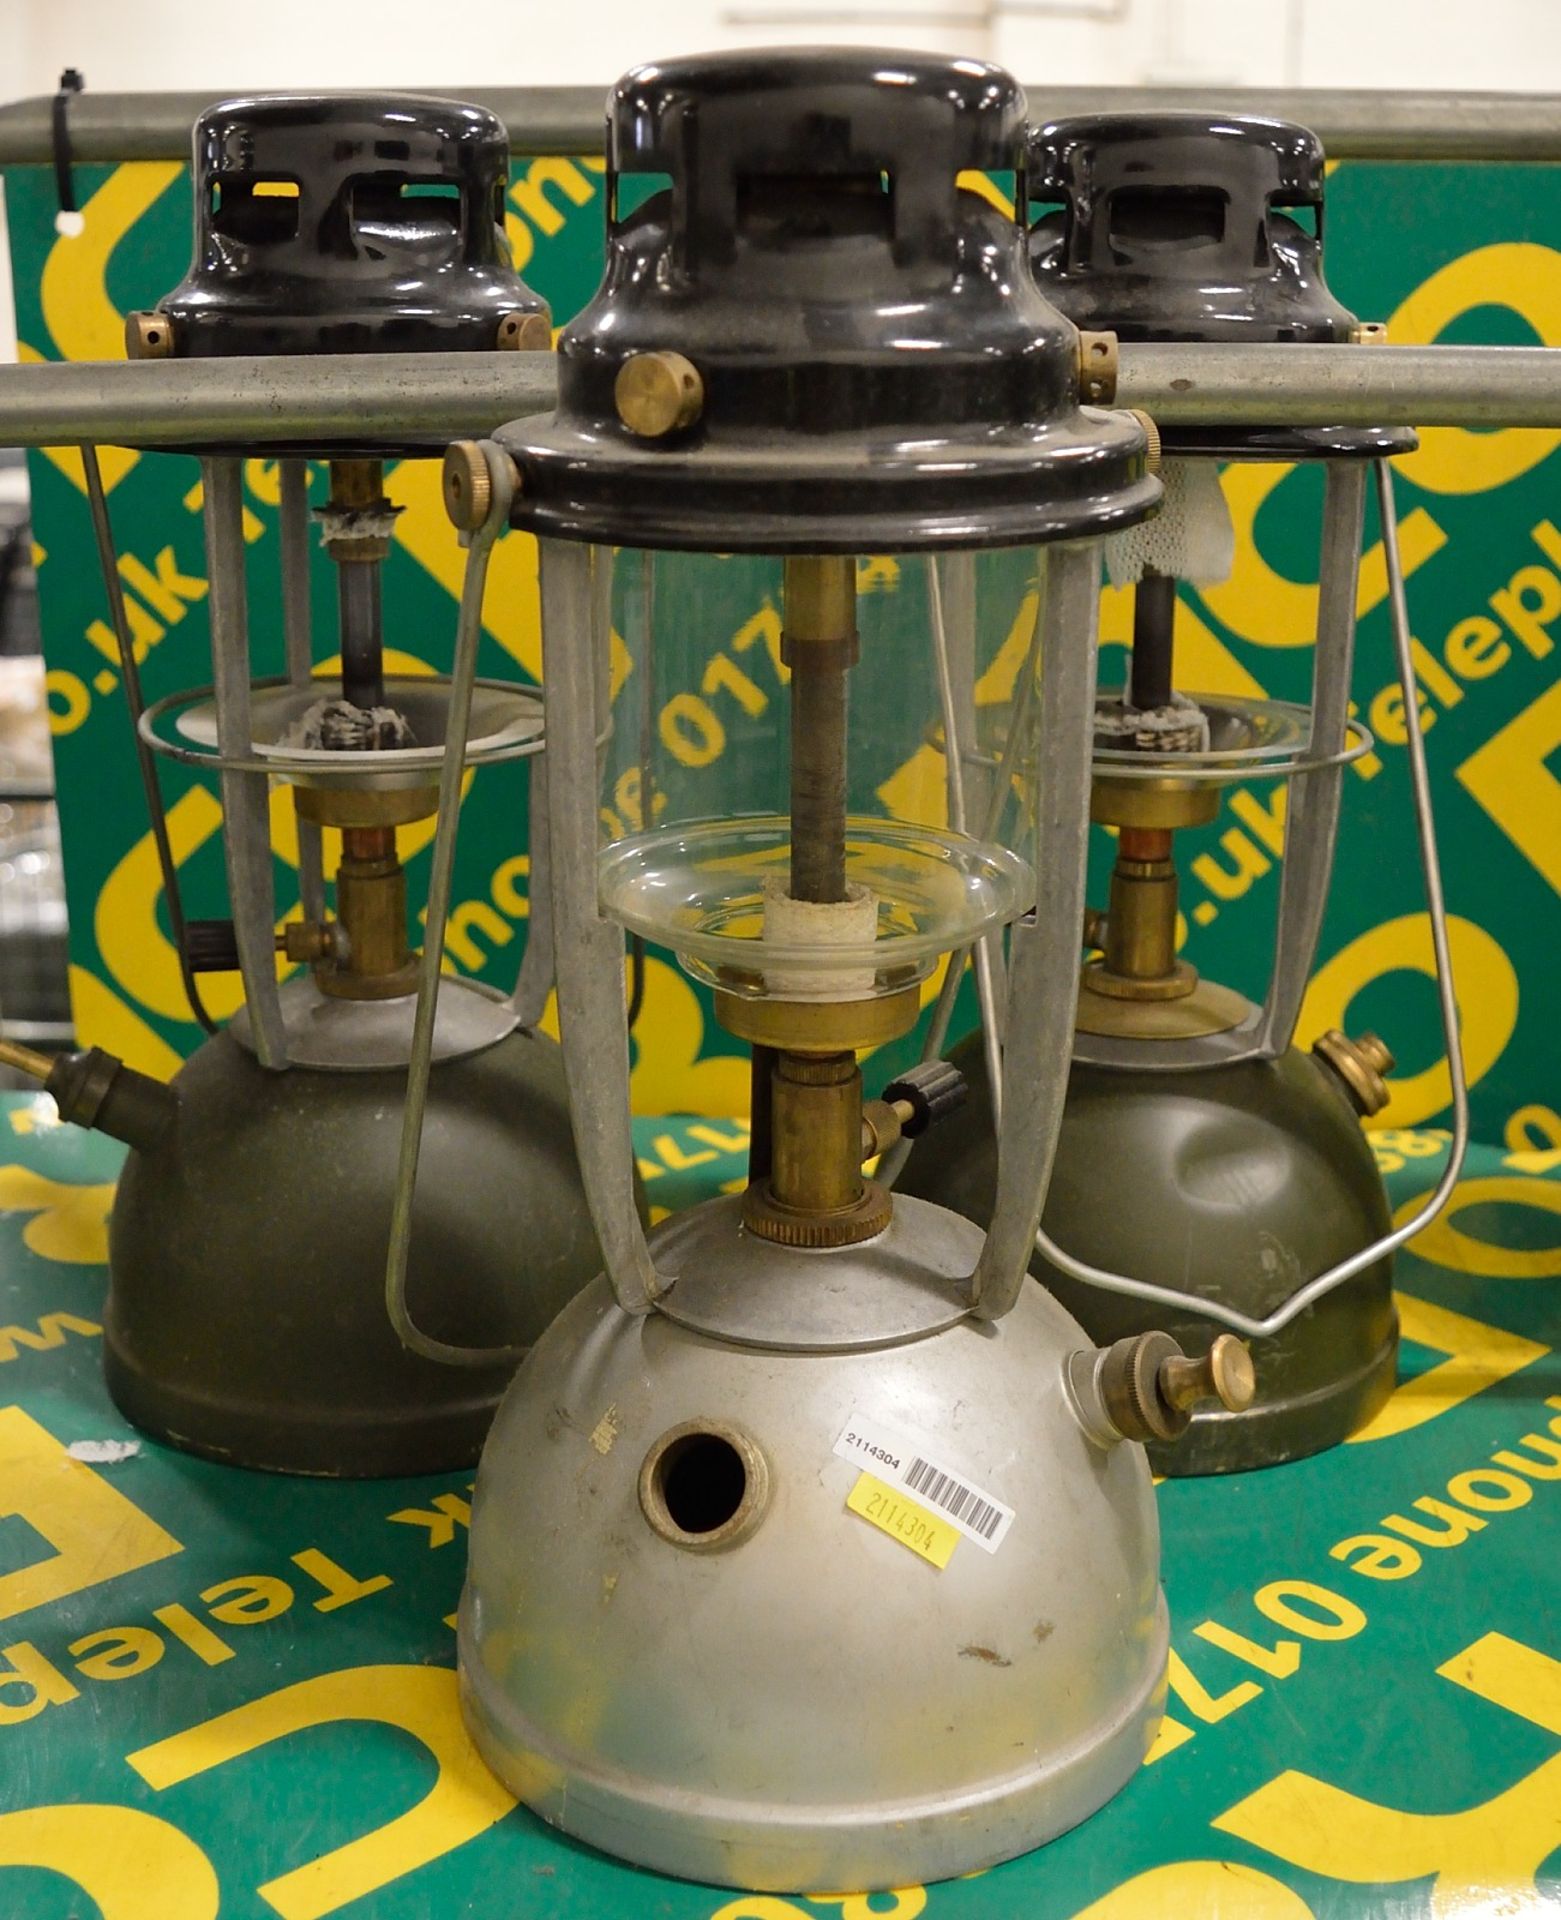 3x Paraffin Lanterns - Some missing glass & filler caps.